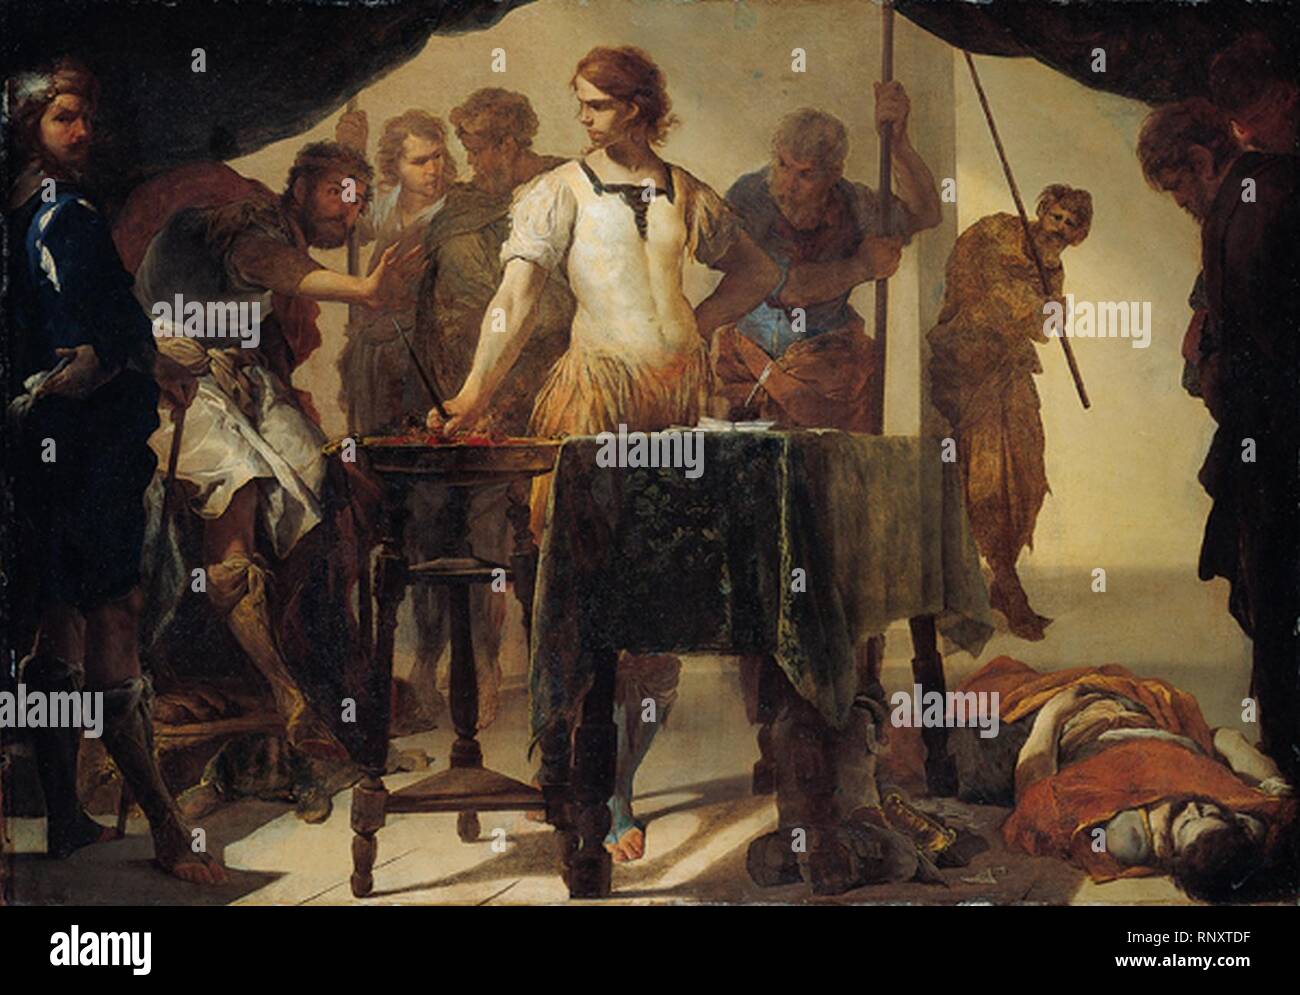 'Caius Mucius Scaevola auxquels le roi Porsenna" huile sur toile de cuivre par Bernardo Cavallino. Banque D'Images